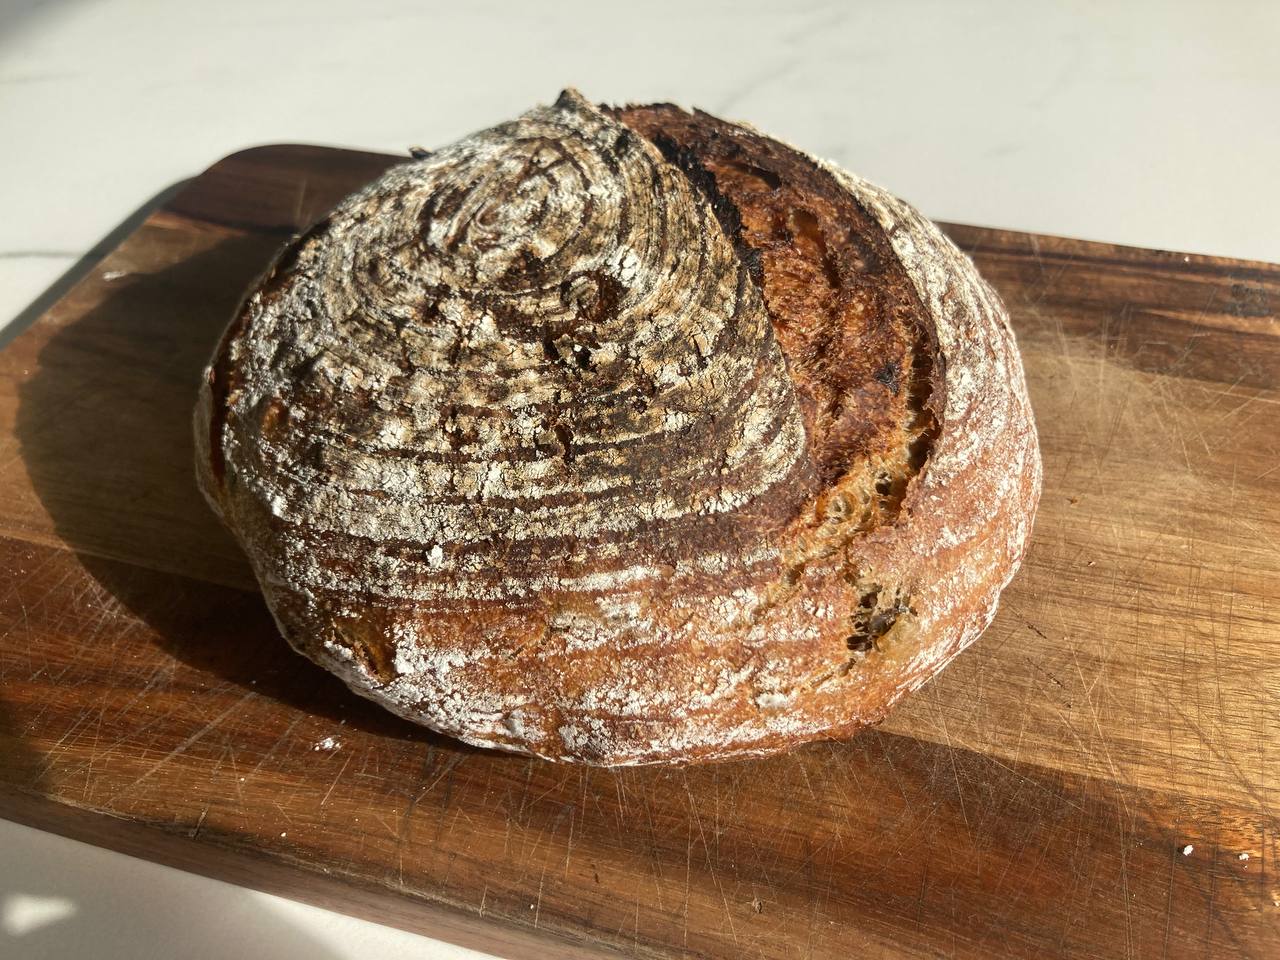 Sourdough buckwheat bread with mushrooms